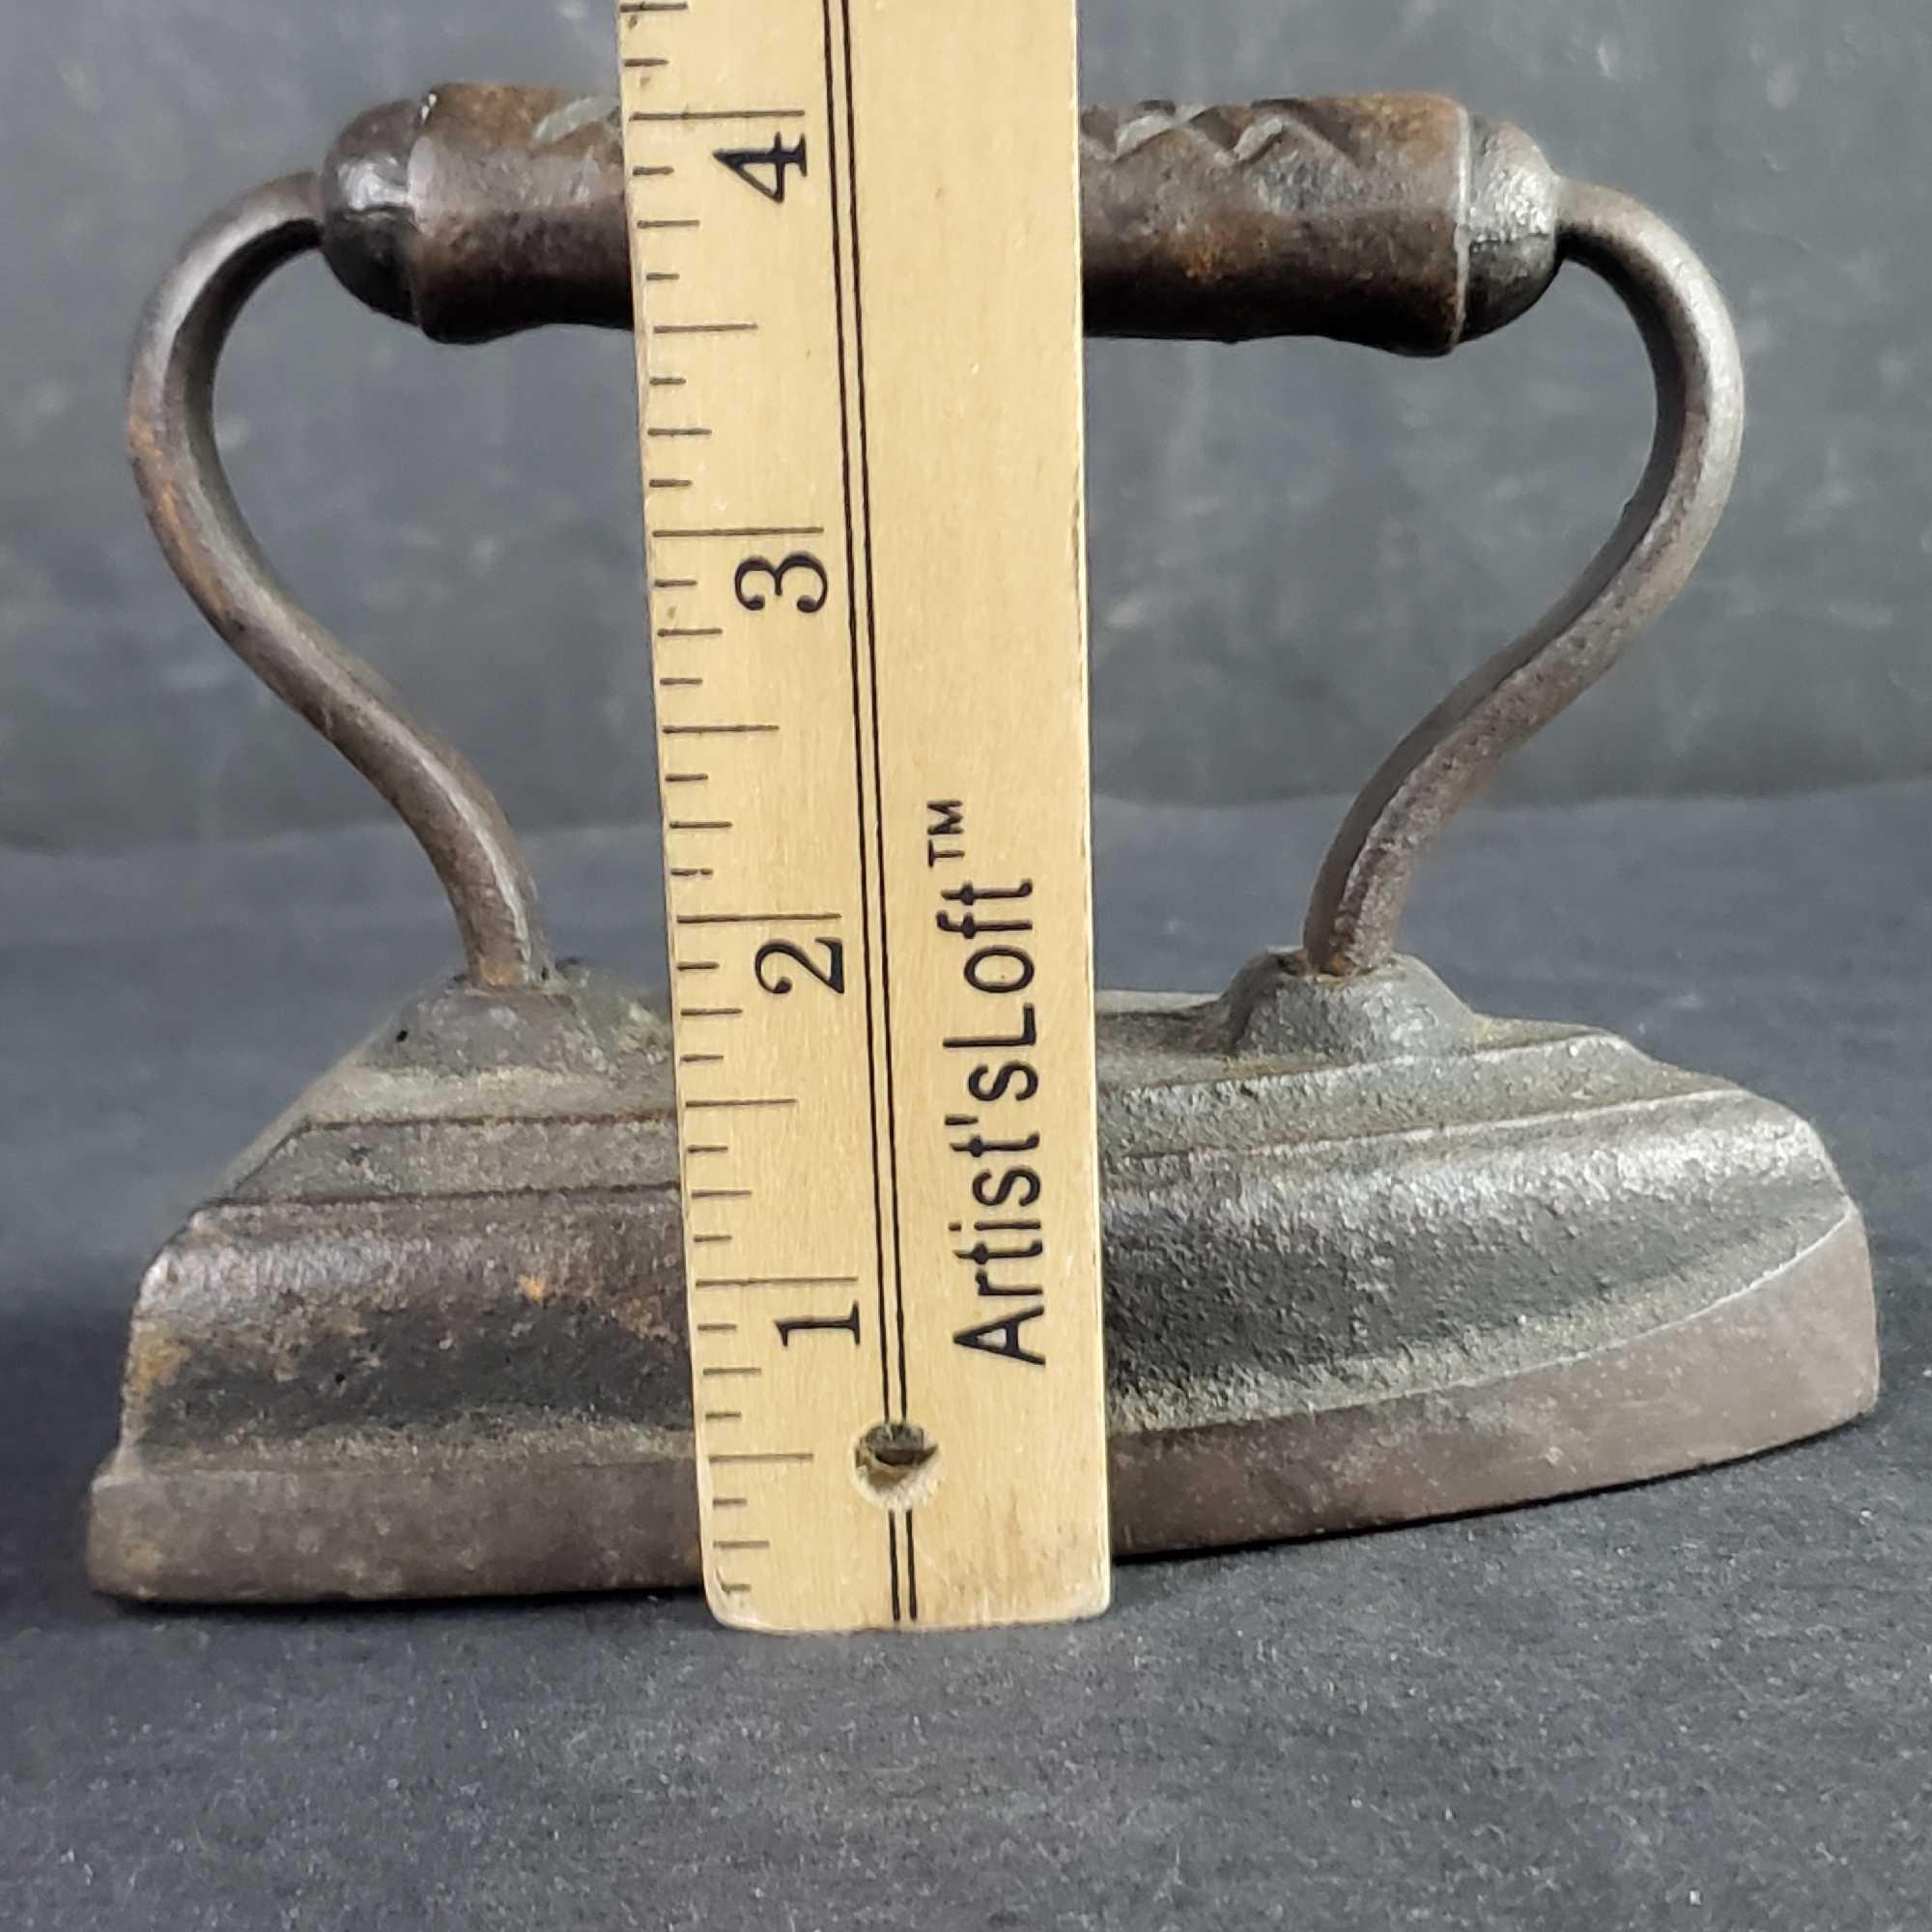 Antique A.C. Williams Co. sad Iron UDX 4 iron small cast iron pot